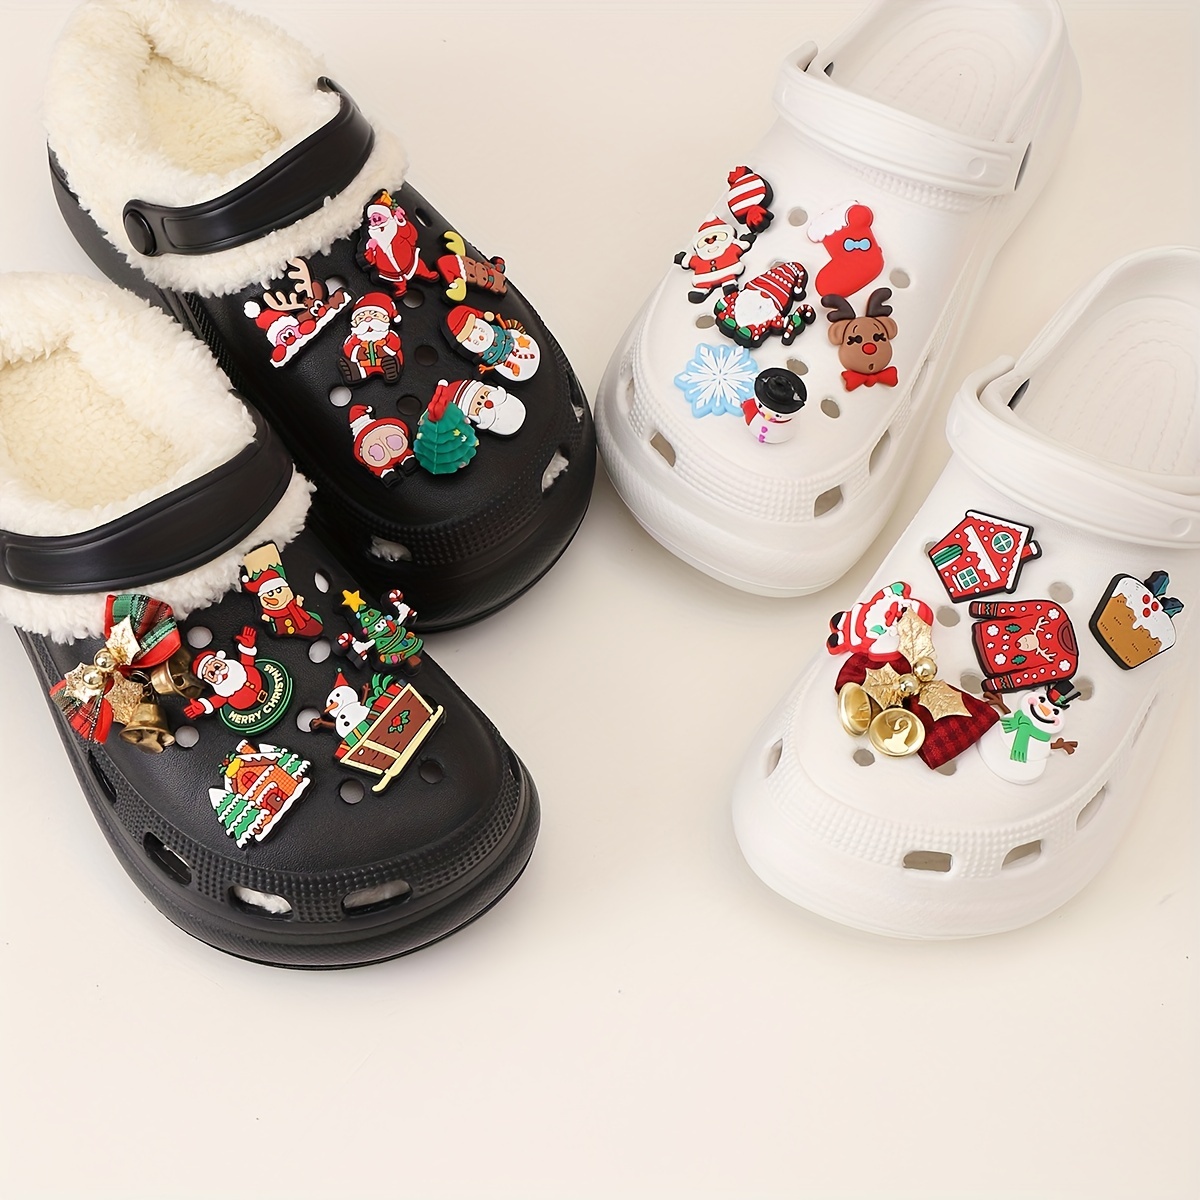 40Pcs Cute Kawaii Croc Charms accessories for Sandals